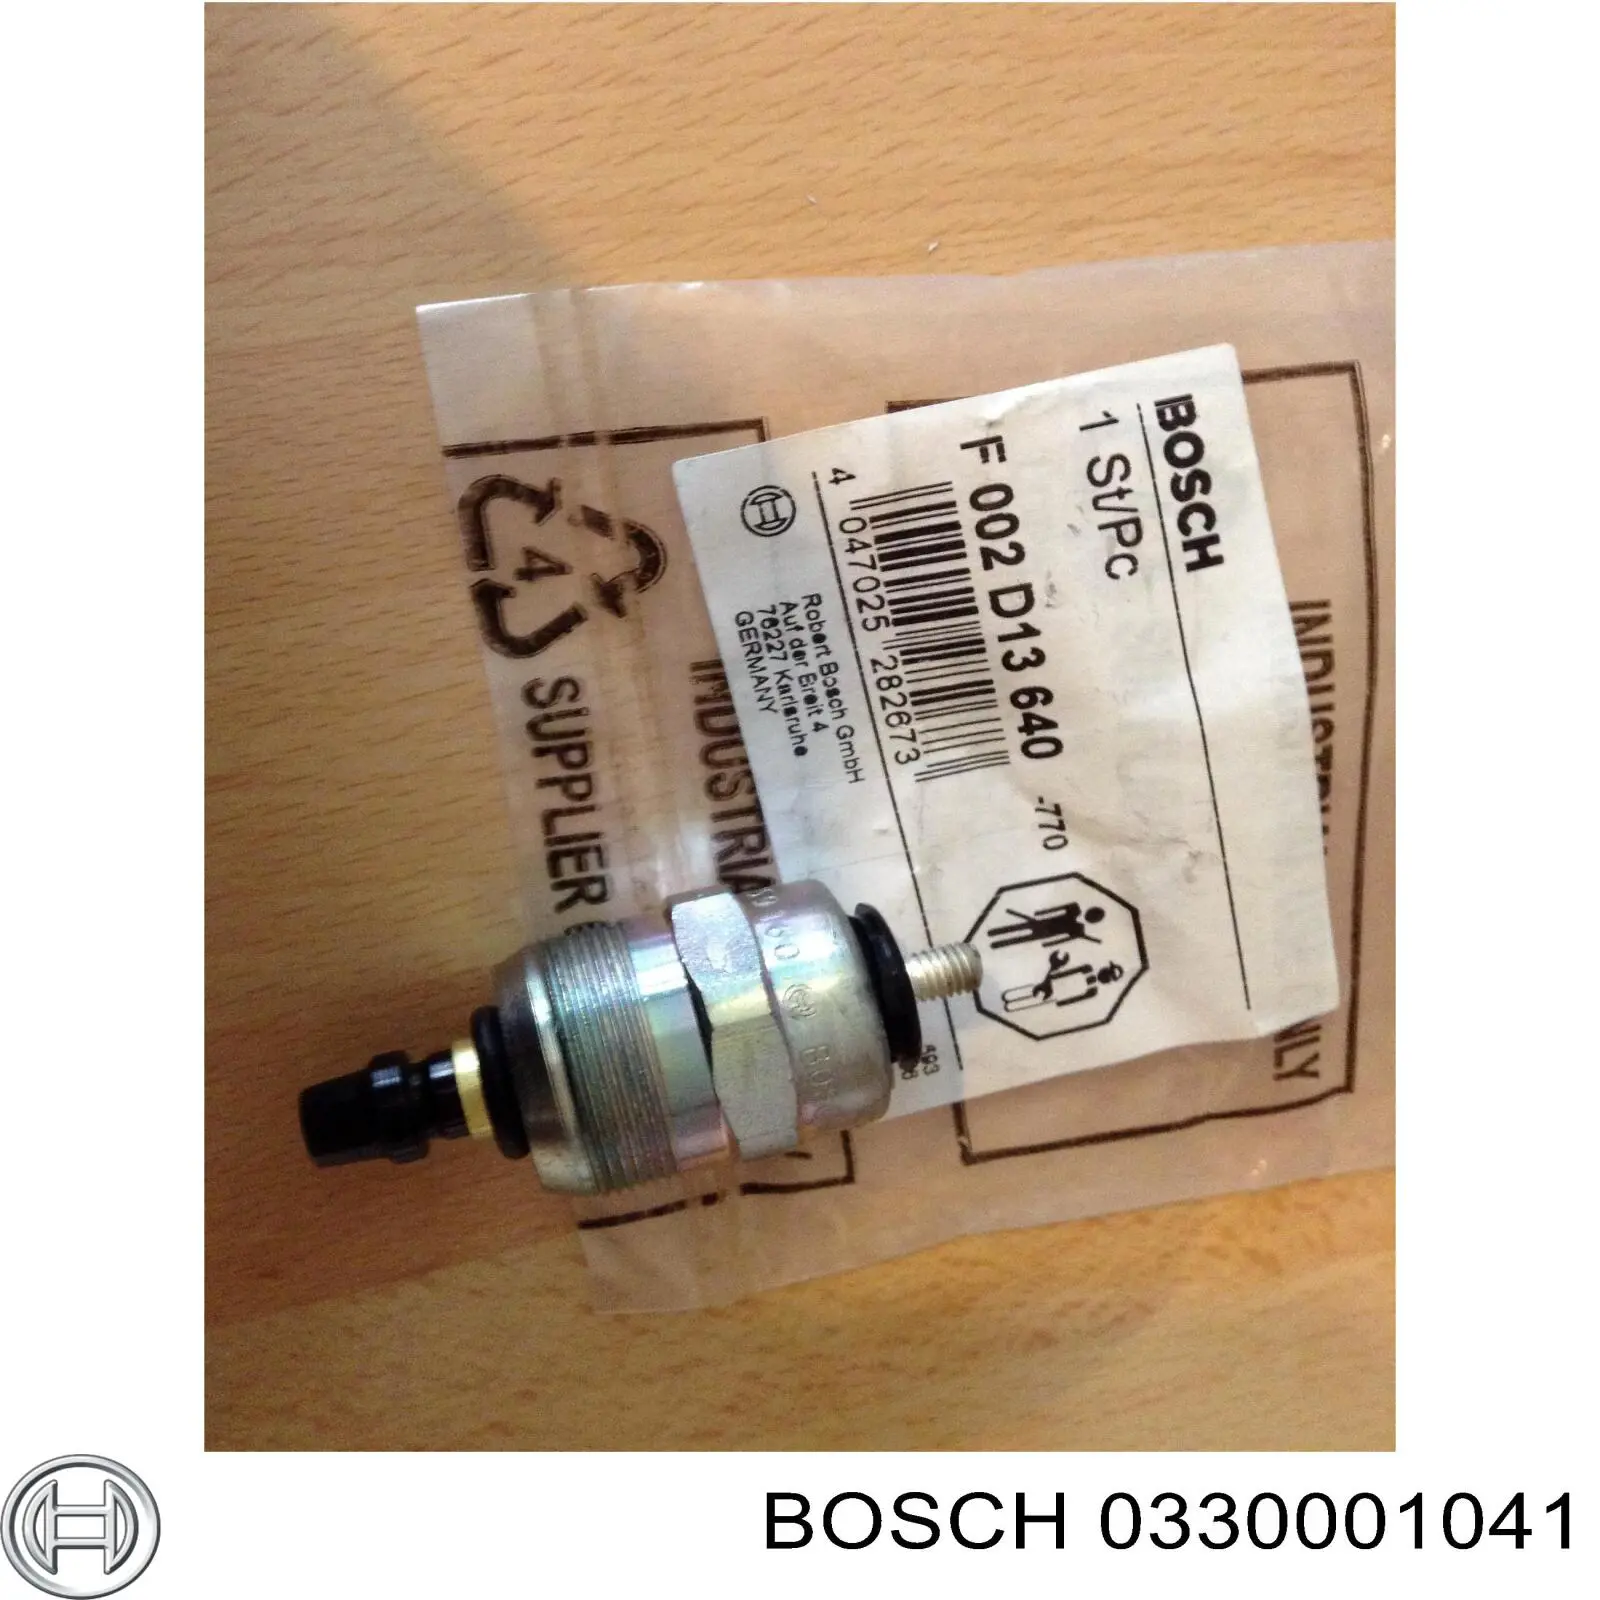 0330001041 Bosch клапан тнвд отсечки топлива (дизель-стоп)